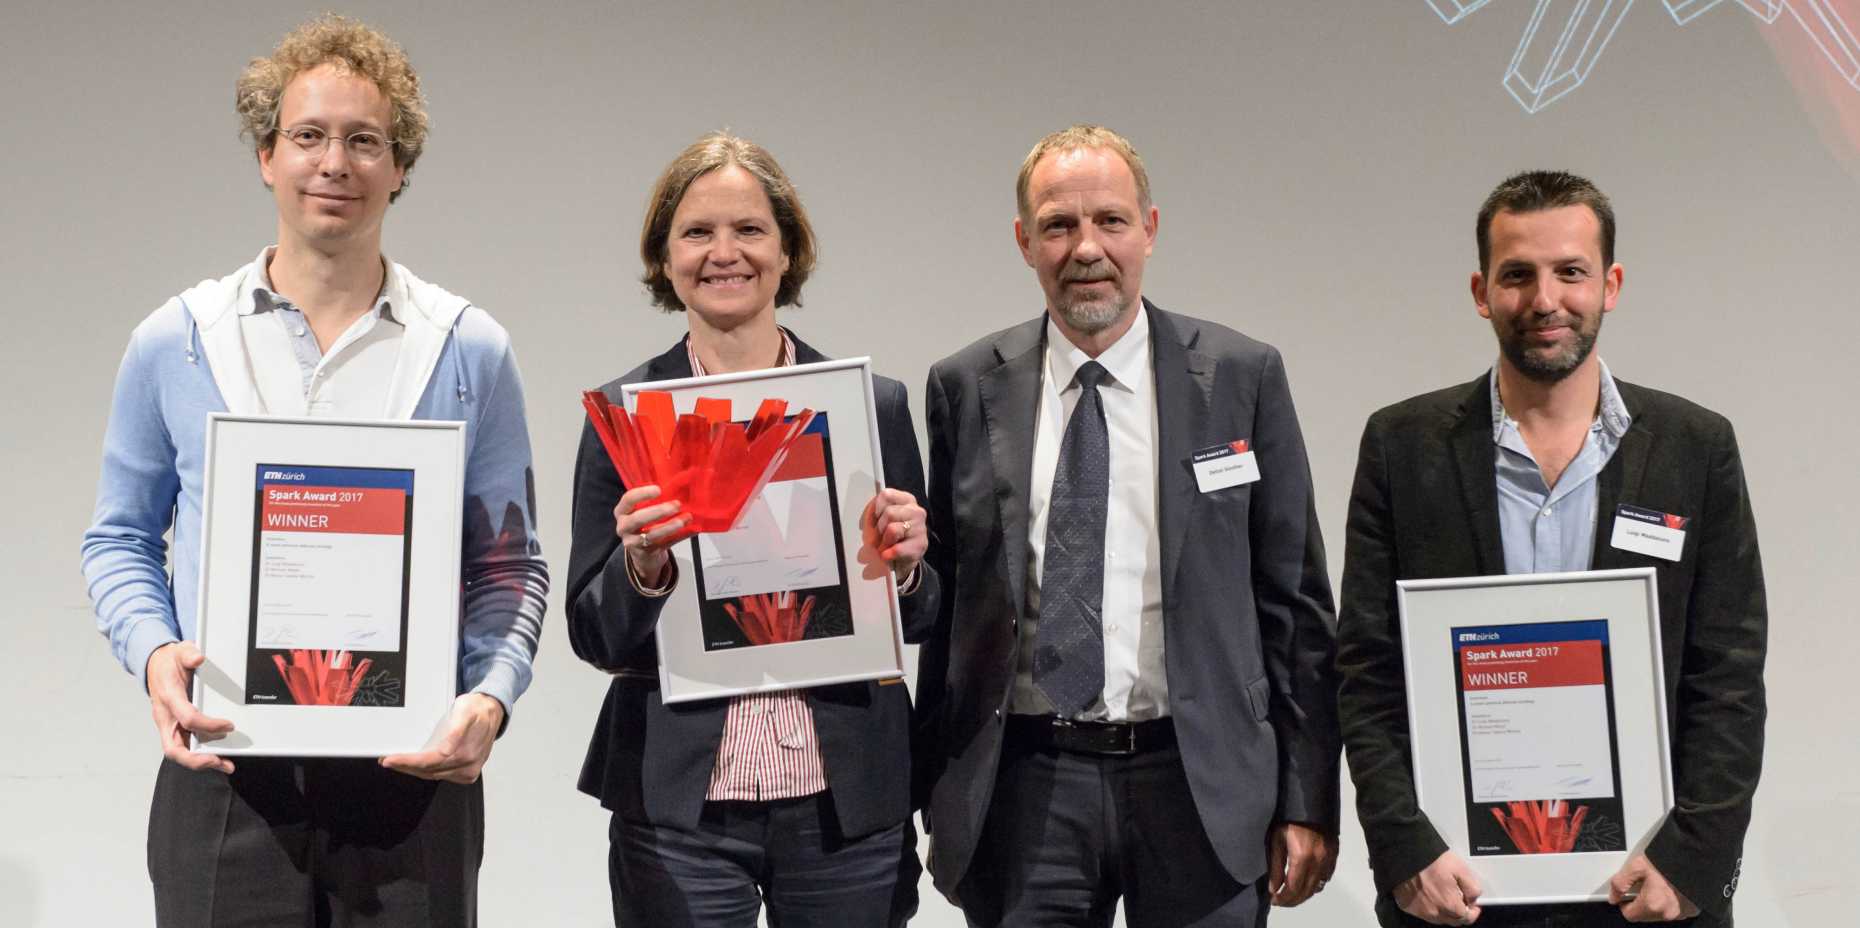 Enlarged view: Sabine Werner mit Spark Award